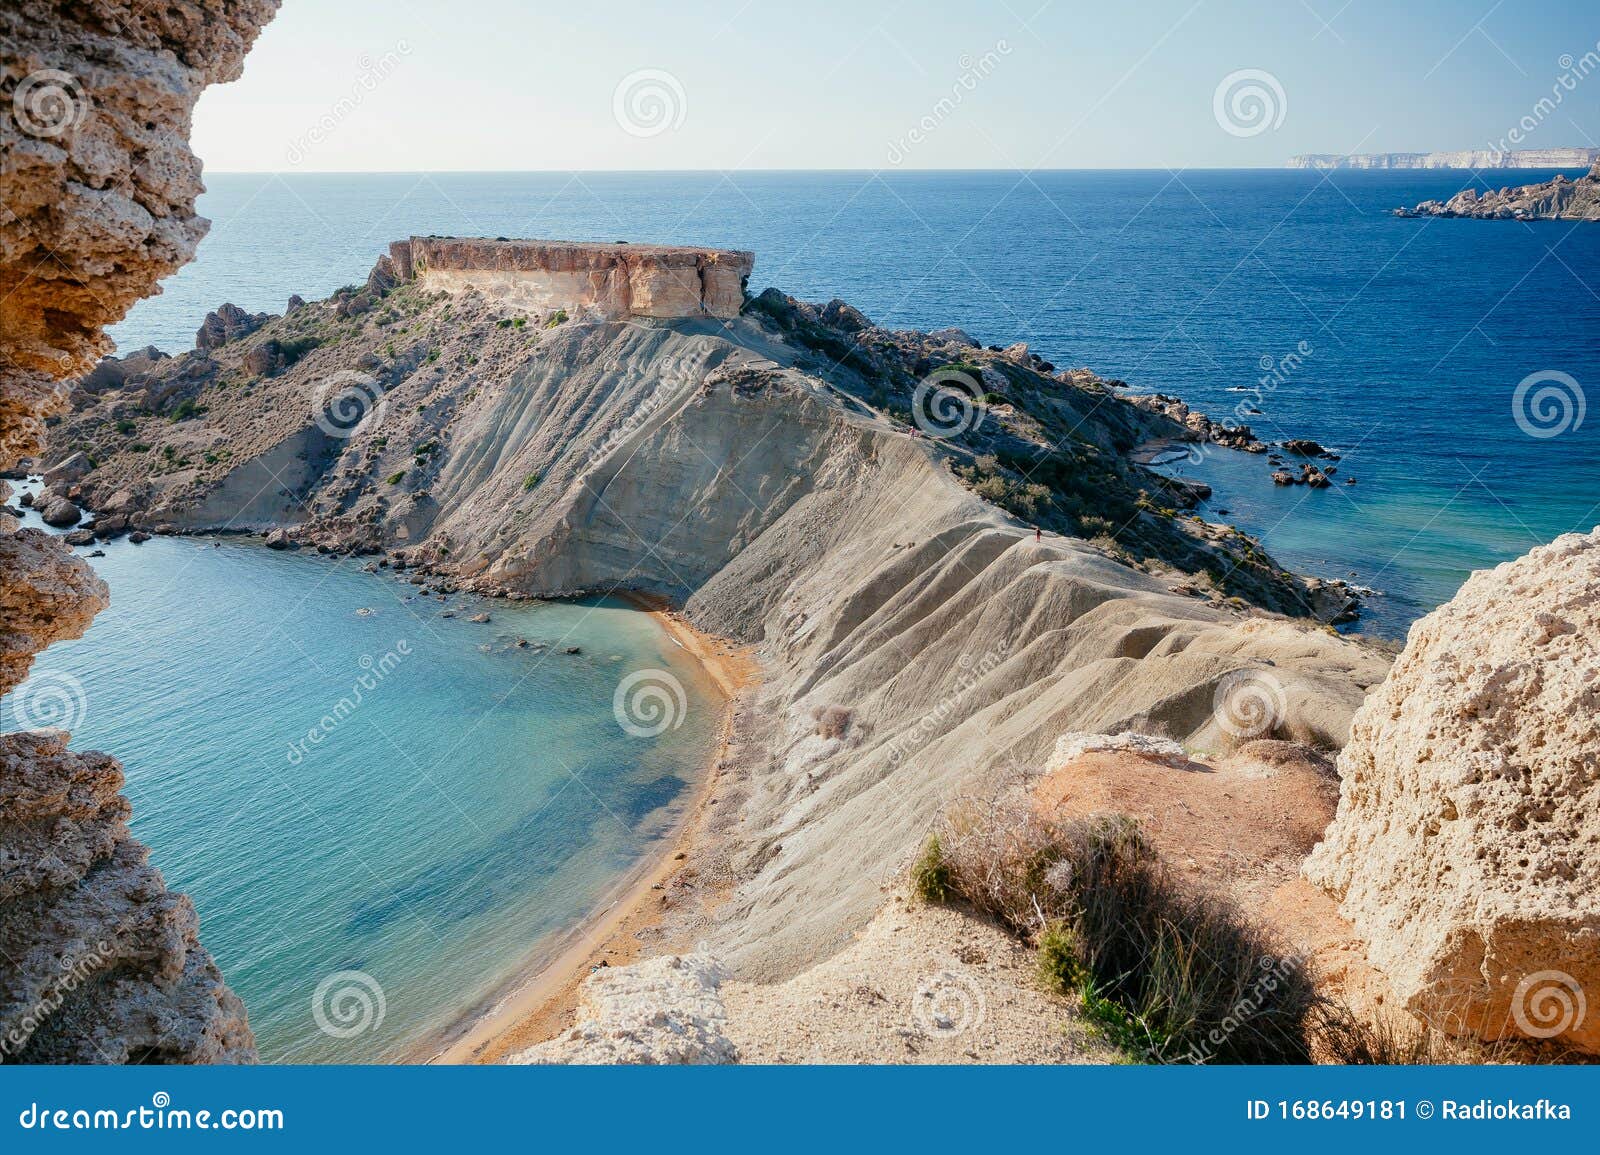 blue water of mediterranian sea. scene of rocky cliff over sunny coastline on malta